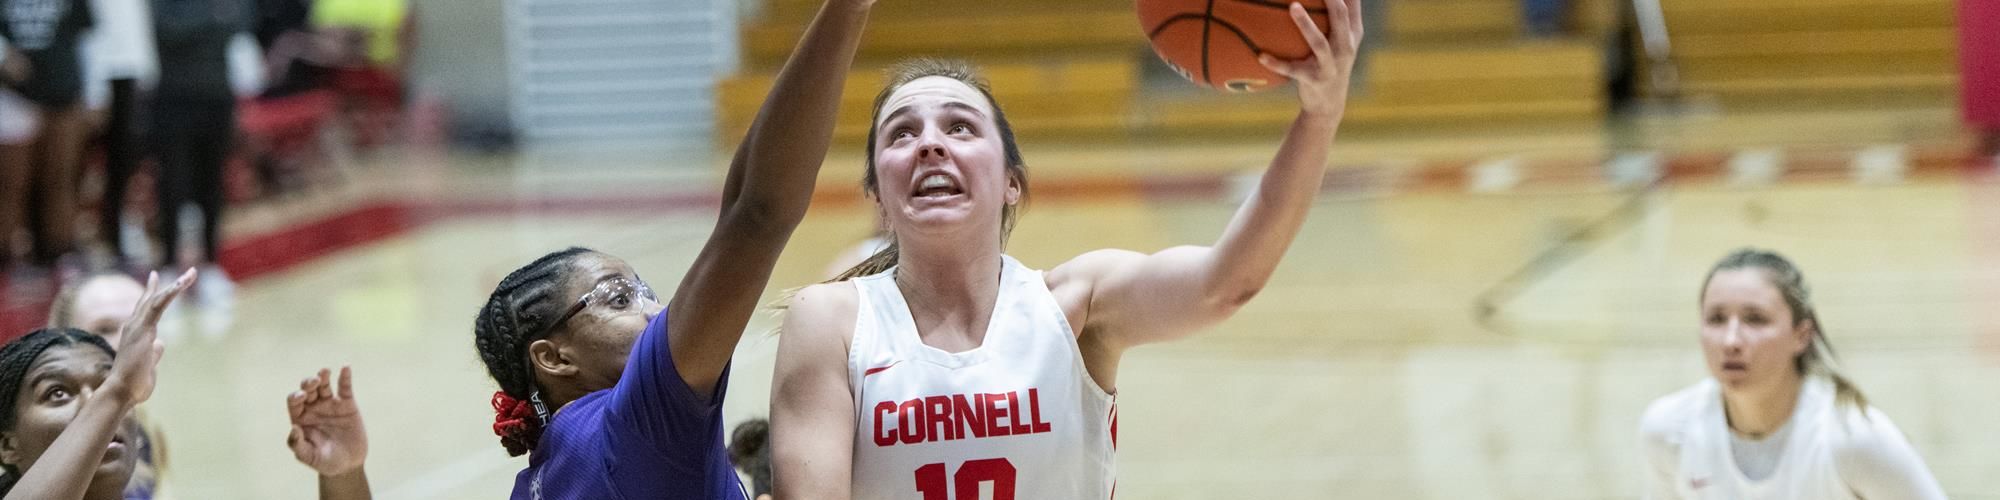 Cornell Women's Basketball